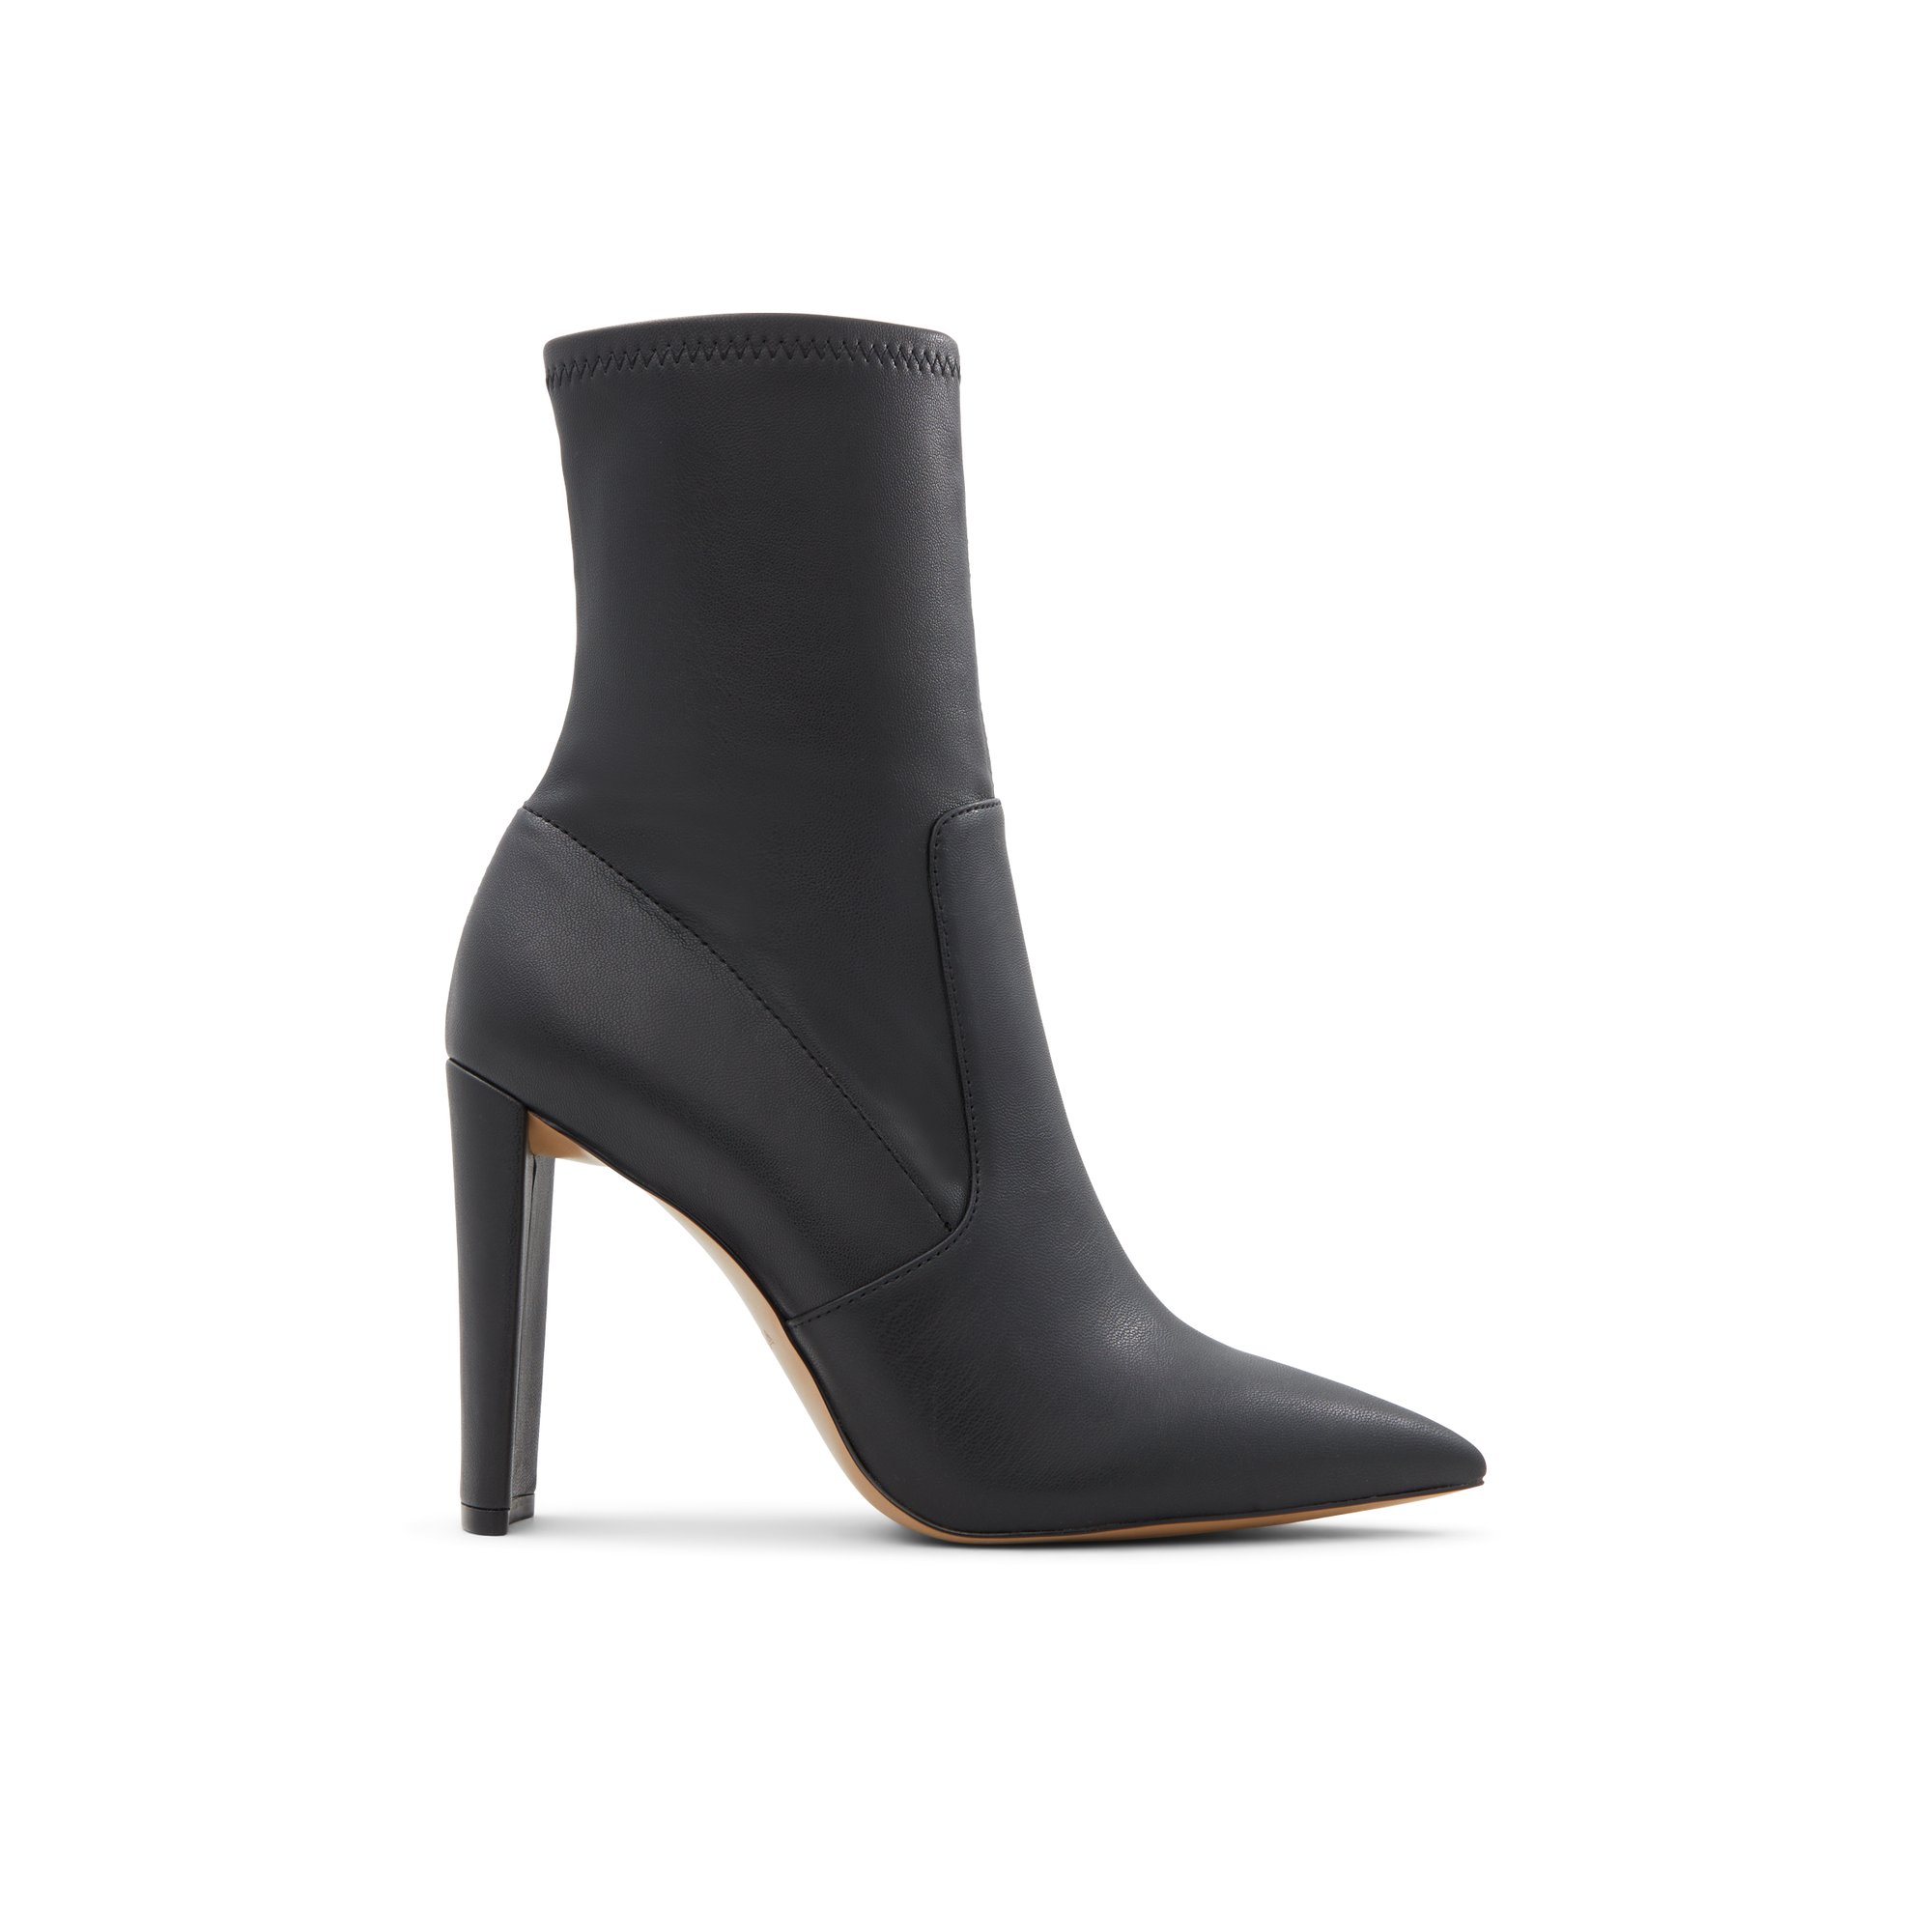 ALDO Dove - Women's Boots Dress - Black